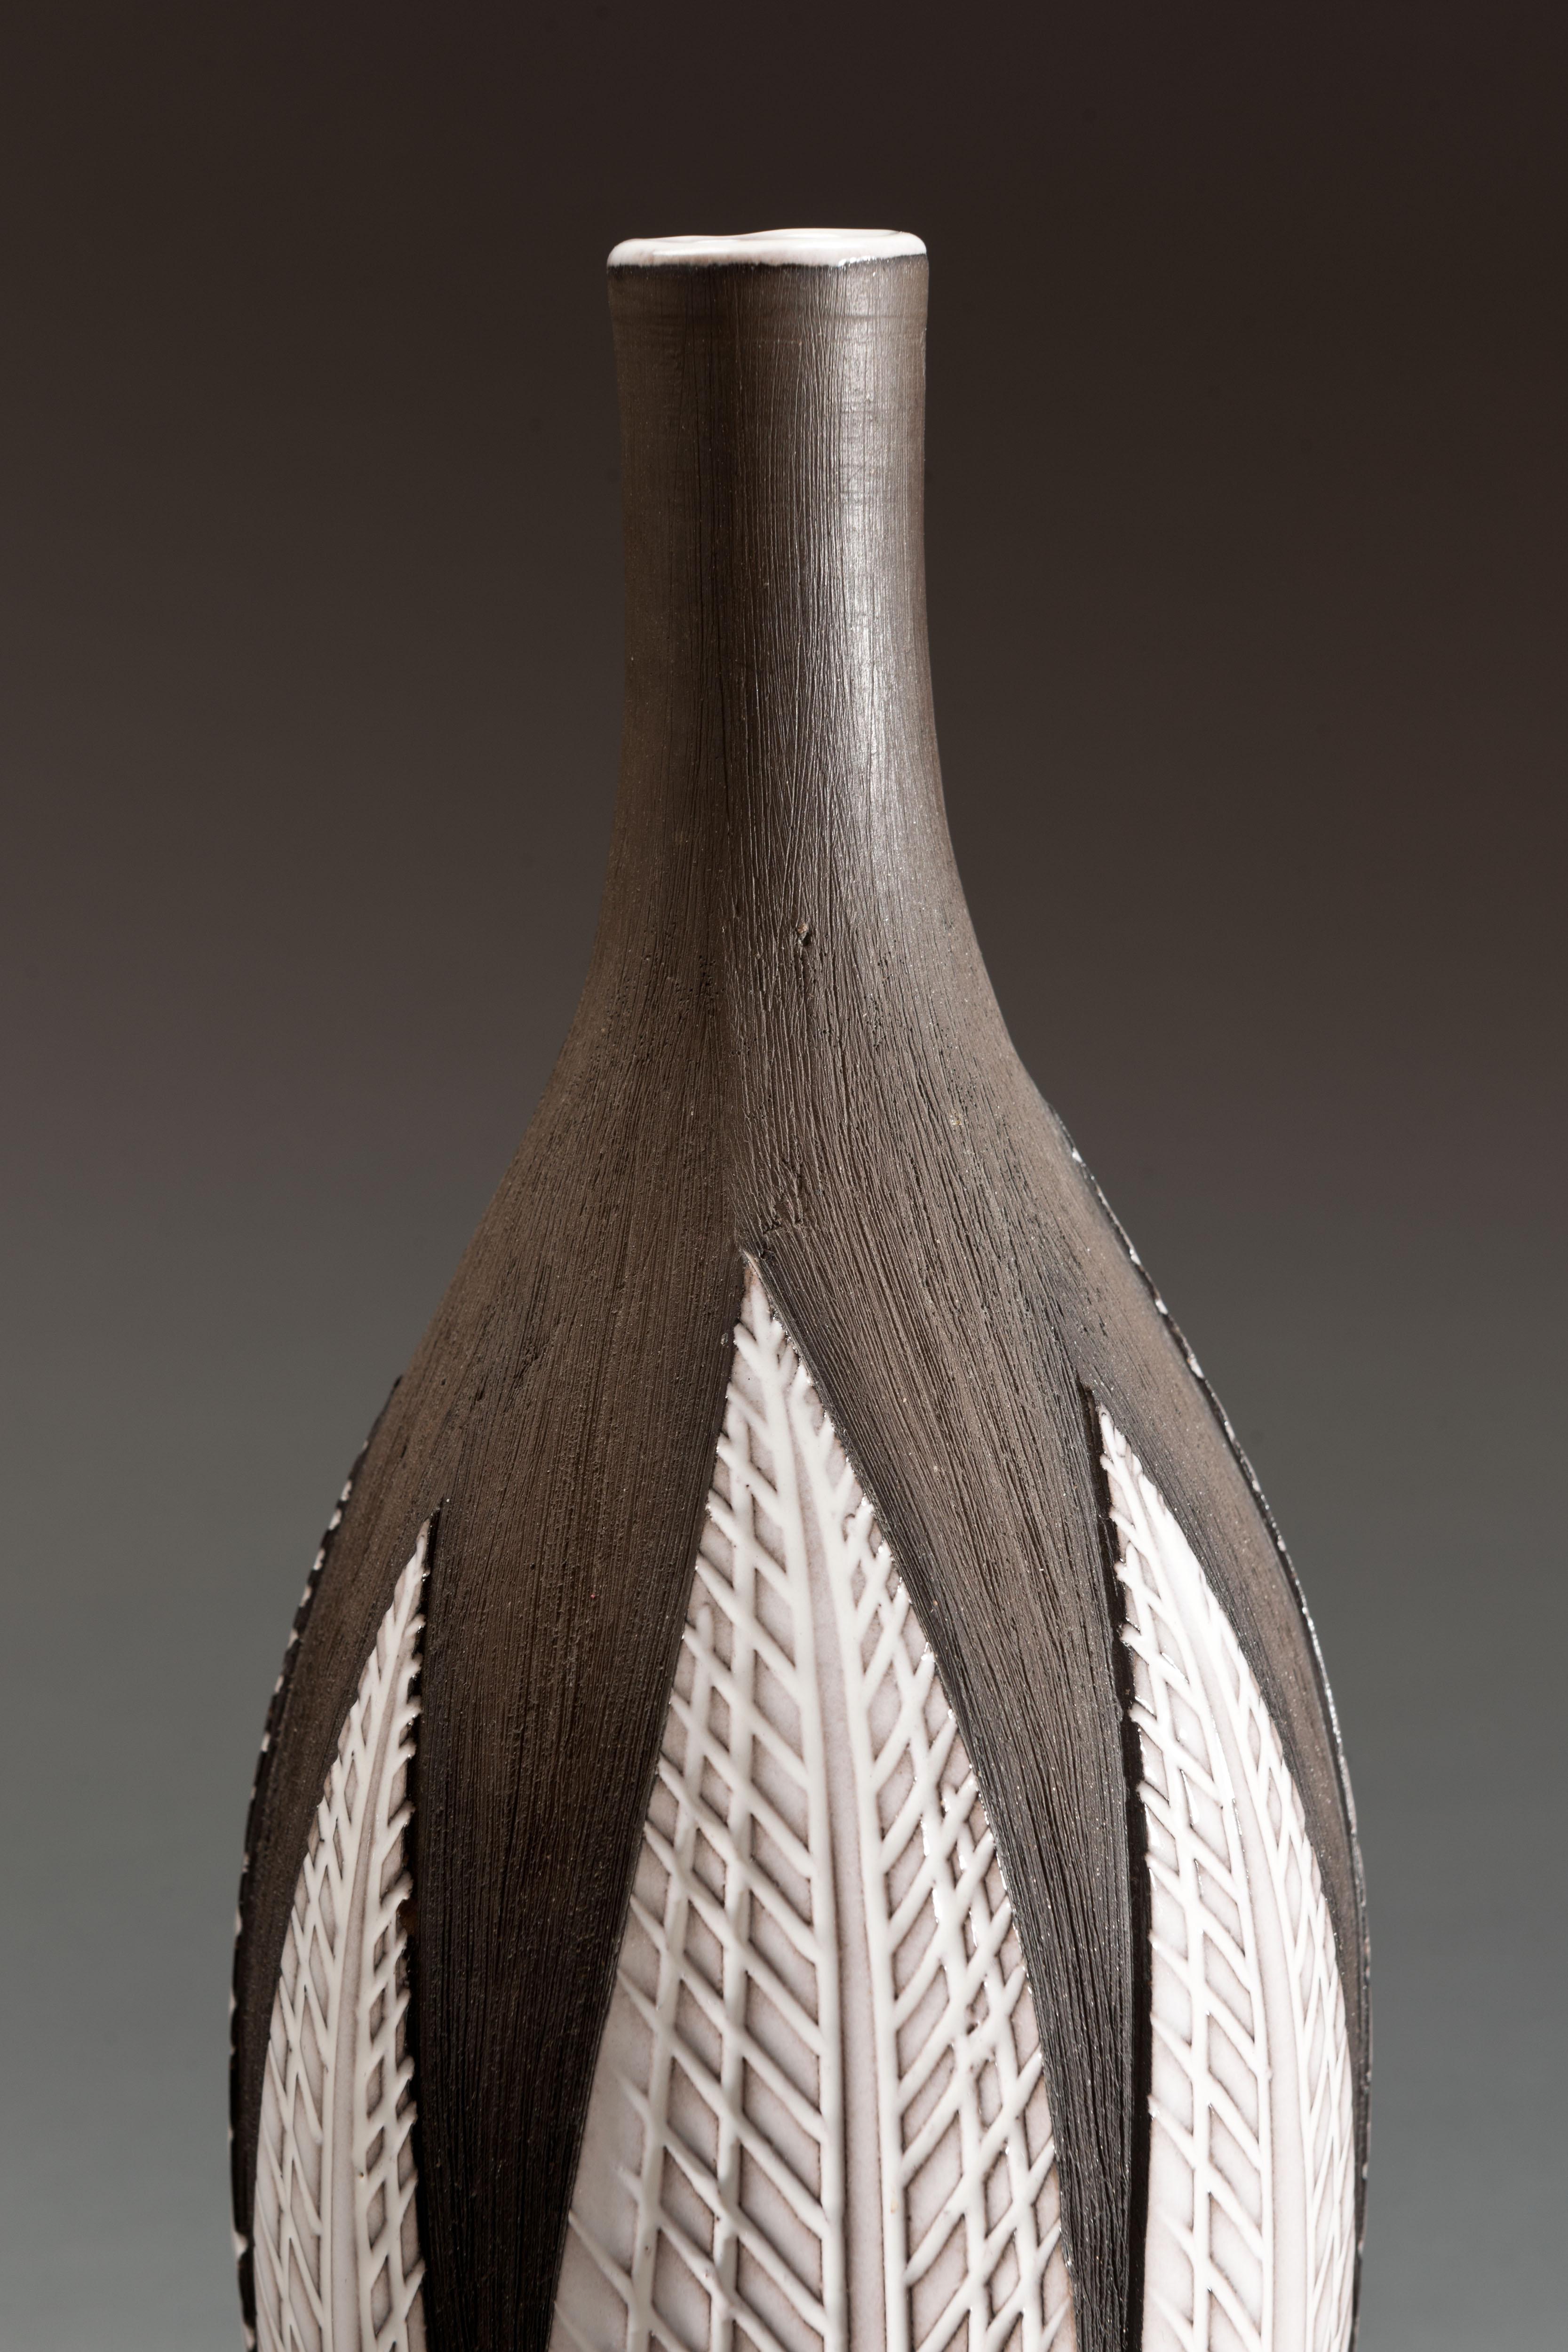 Anna-Lisa Thomson Ceramic 'Paprika' Vases (3) by Upsala Ekeby For Sale 5